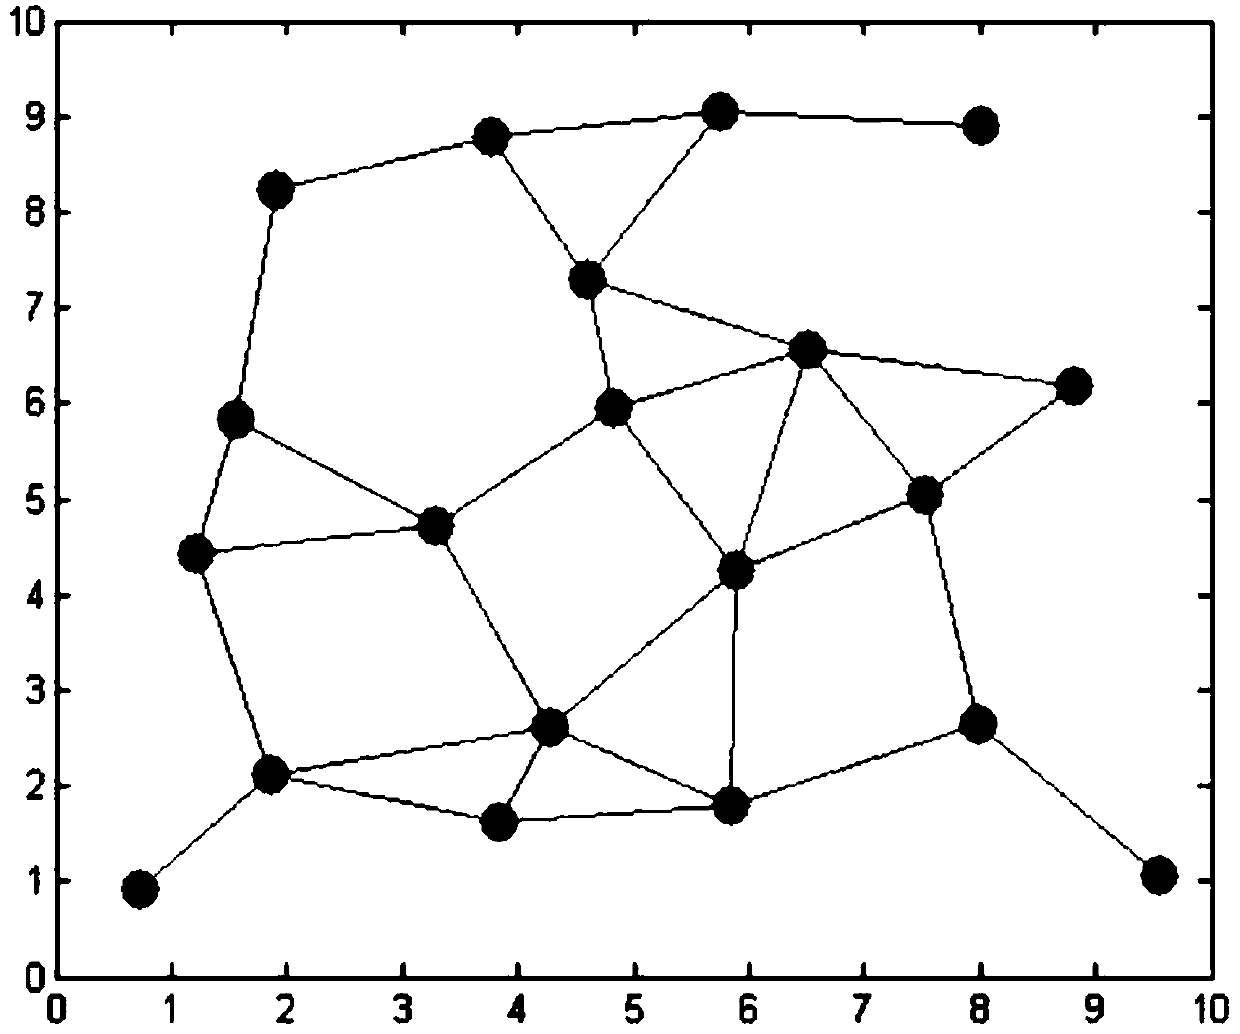 A parameter estimation method for binary sensor networks